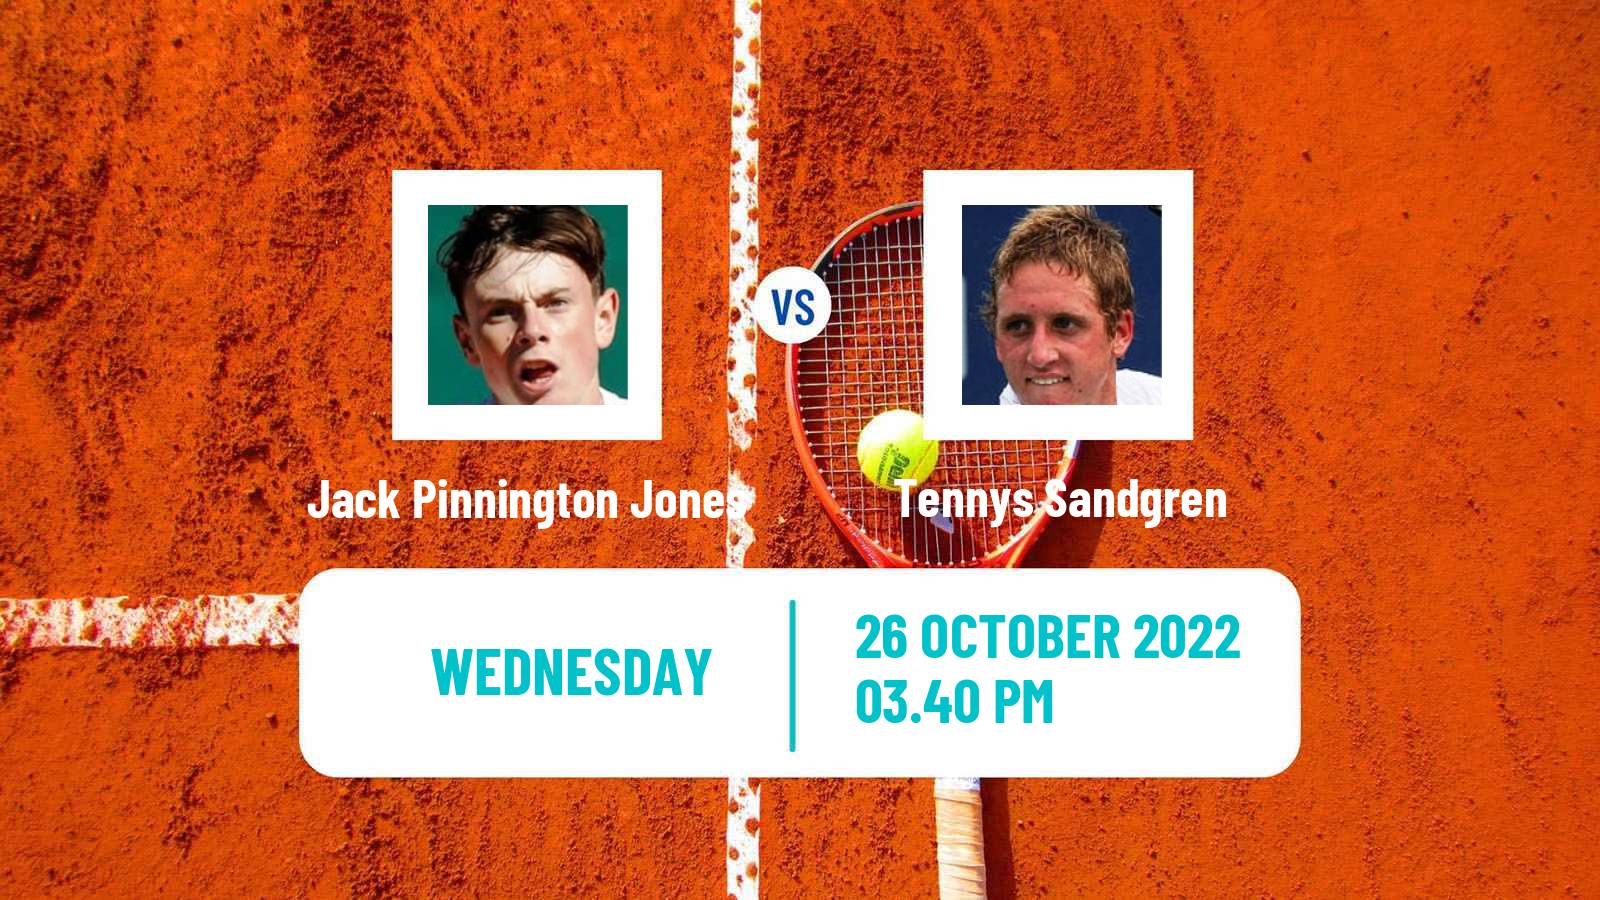 Tennis ATP Challenger Jack Pinnington Jones - Tennys Sandgren